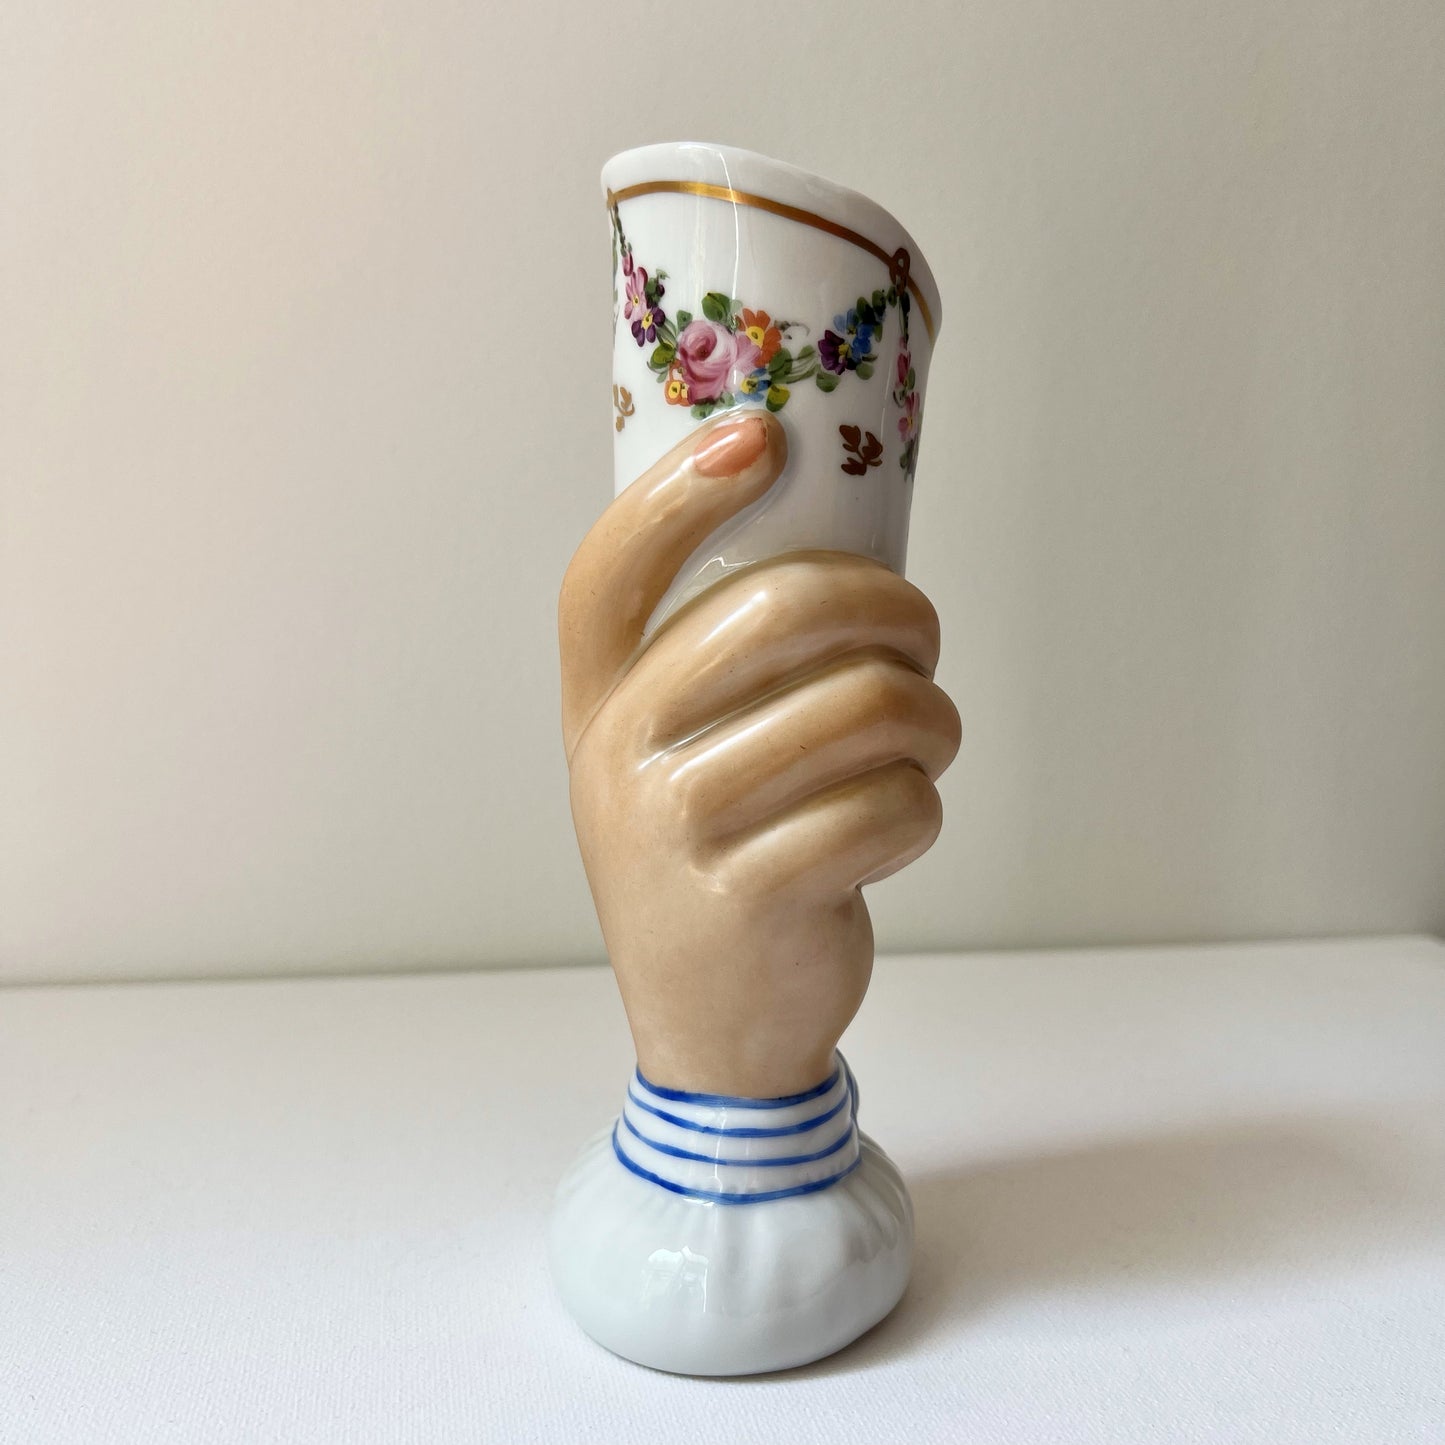 【Vintage】France - 1940s Pottery Hand Vase